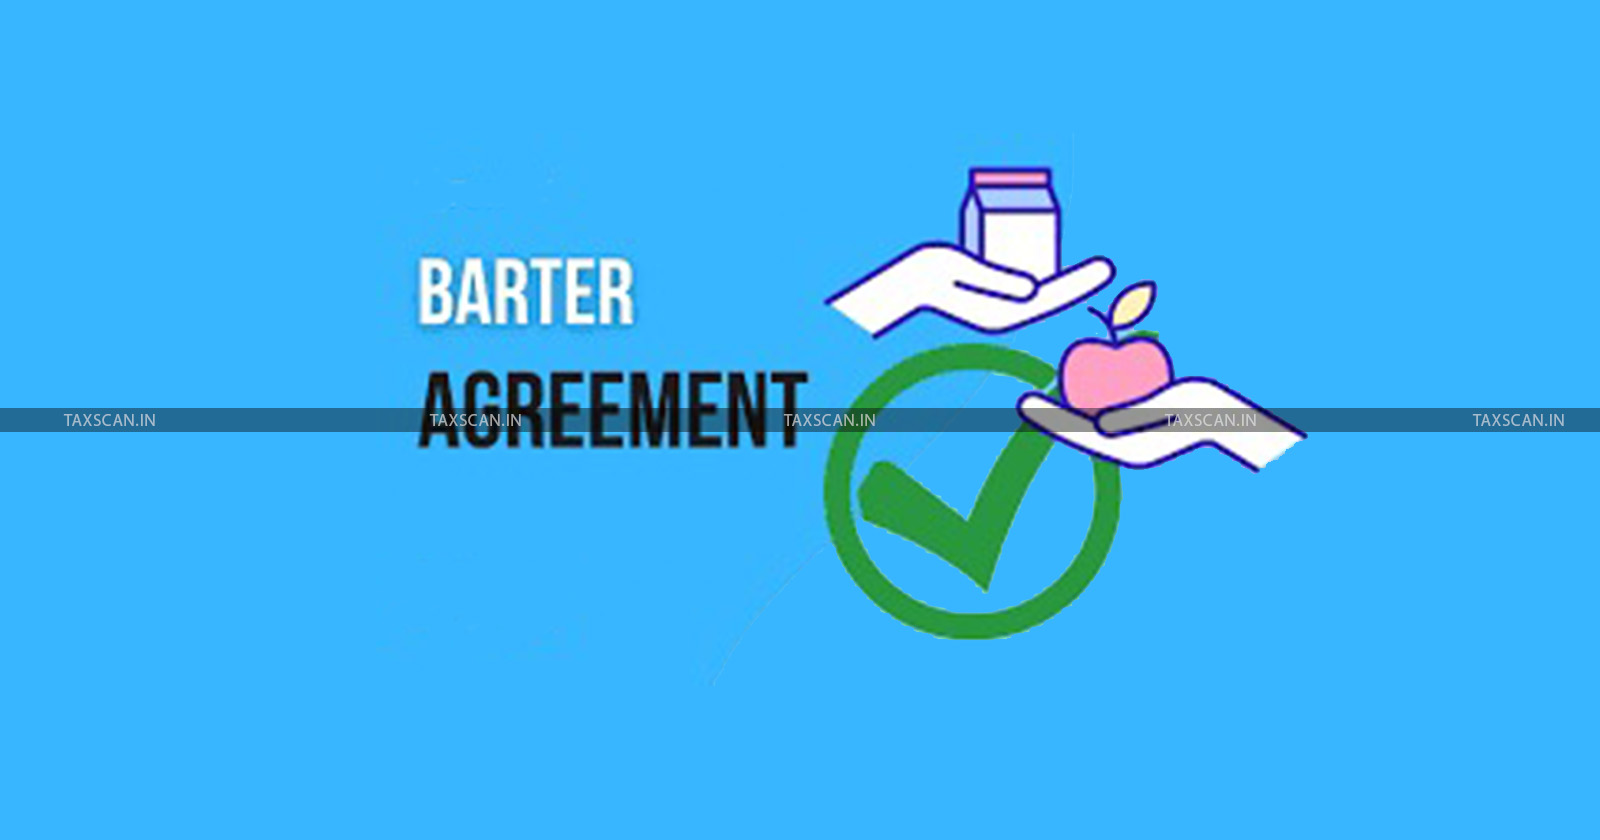 Barter Agreement - Barter - Agreement - Operational Debtor - Debtor - NCLAT - TAXSCAN